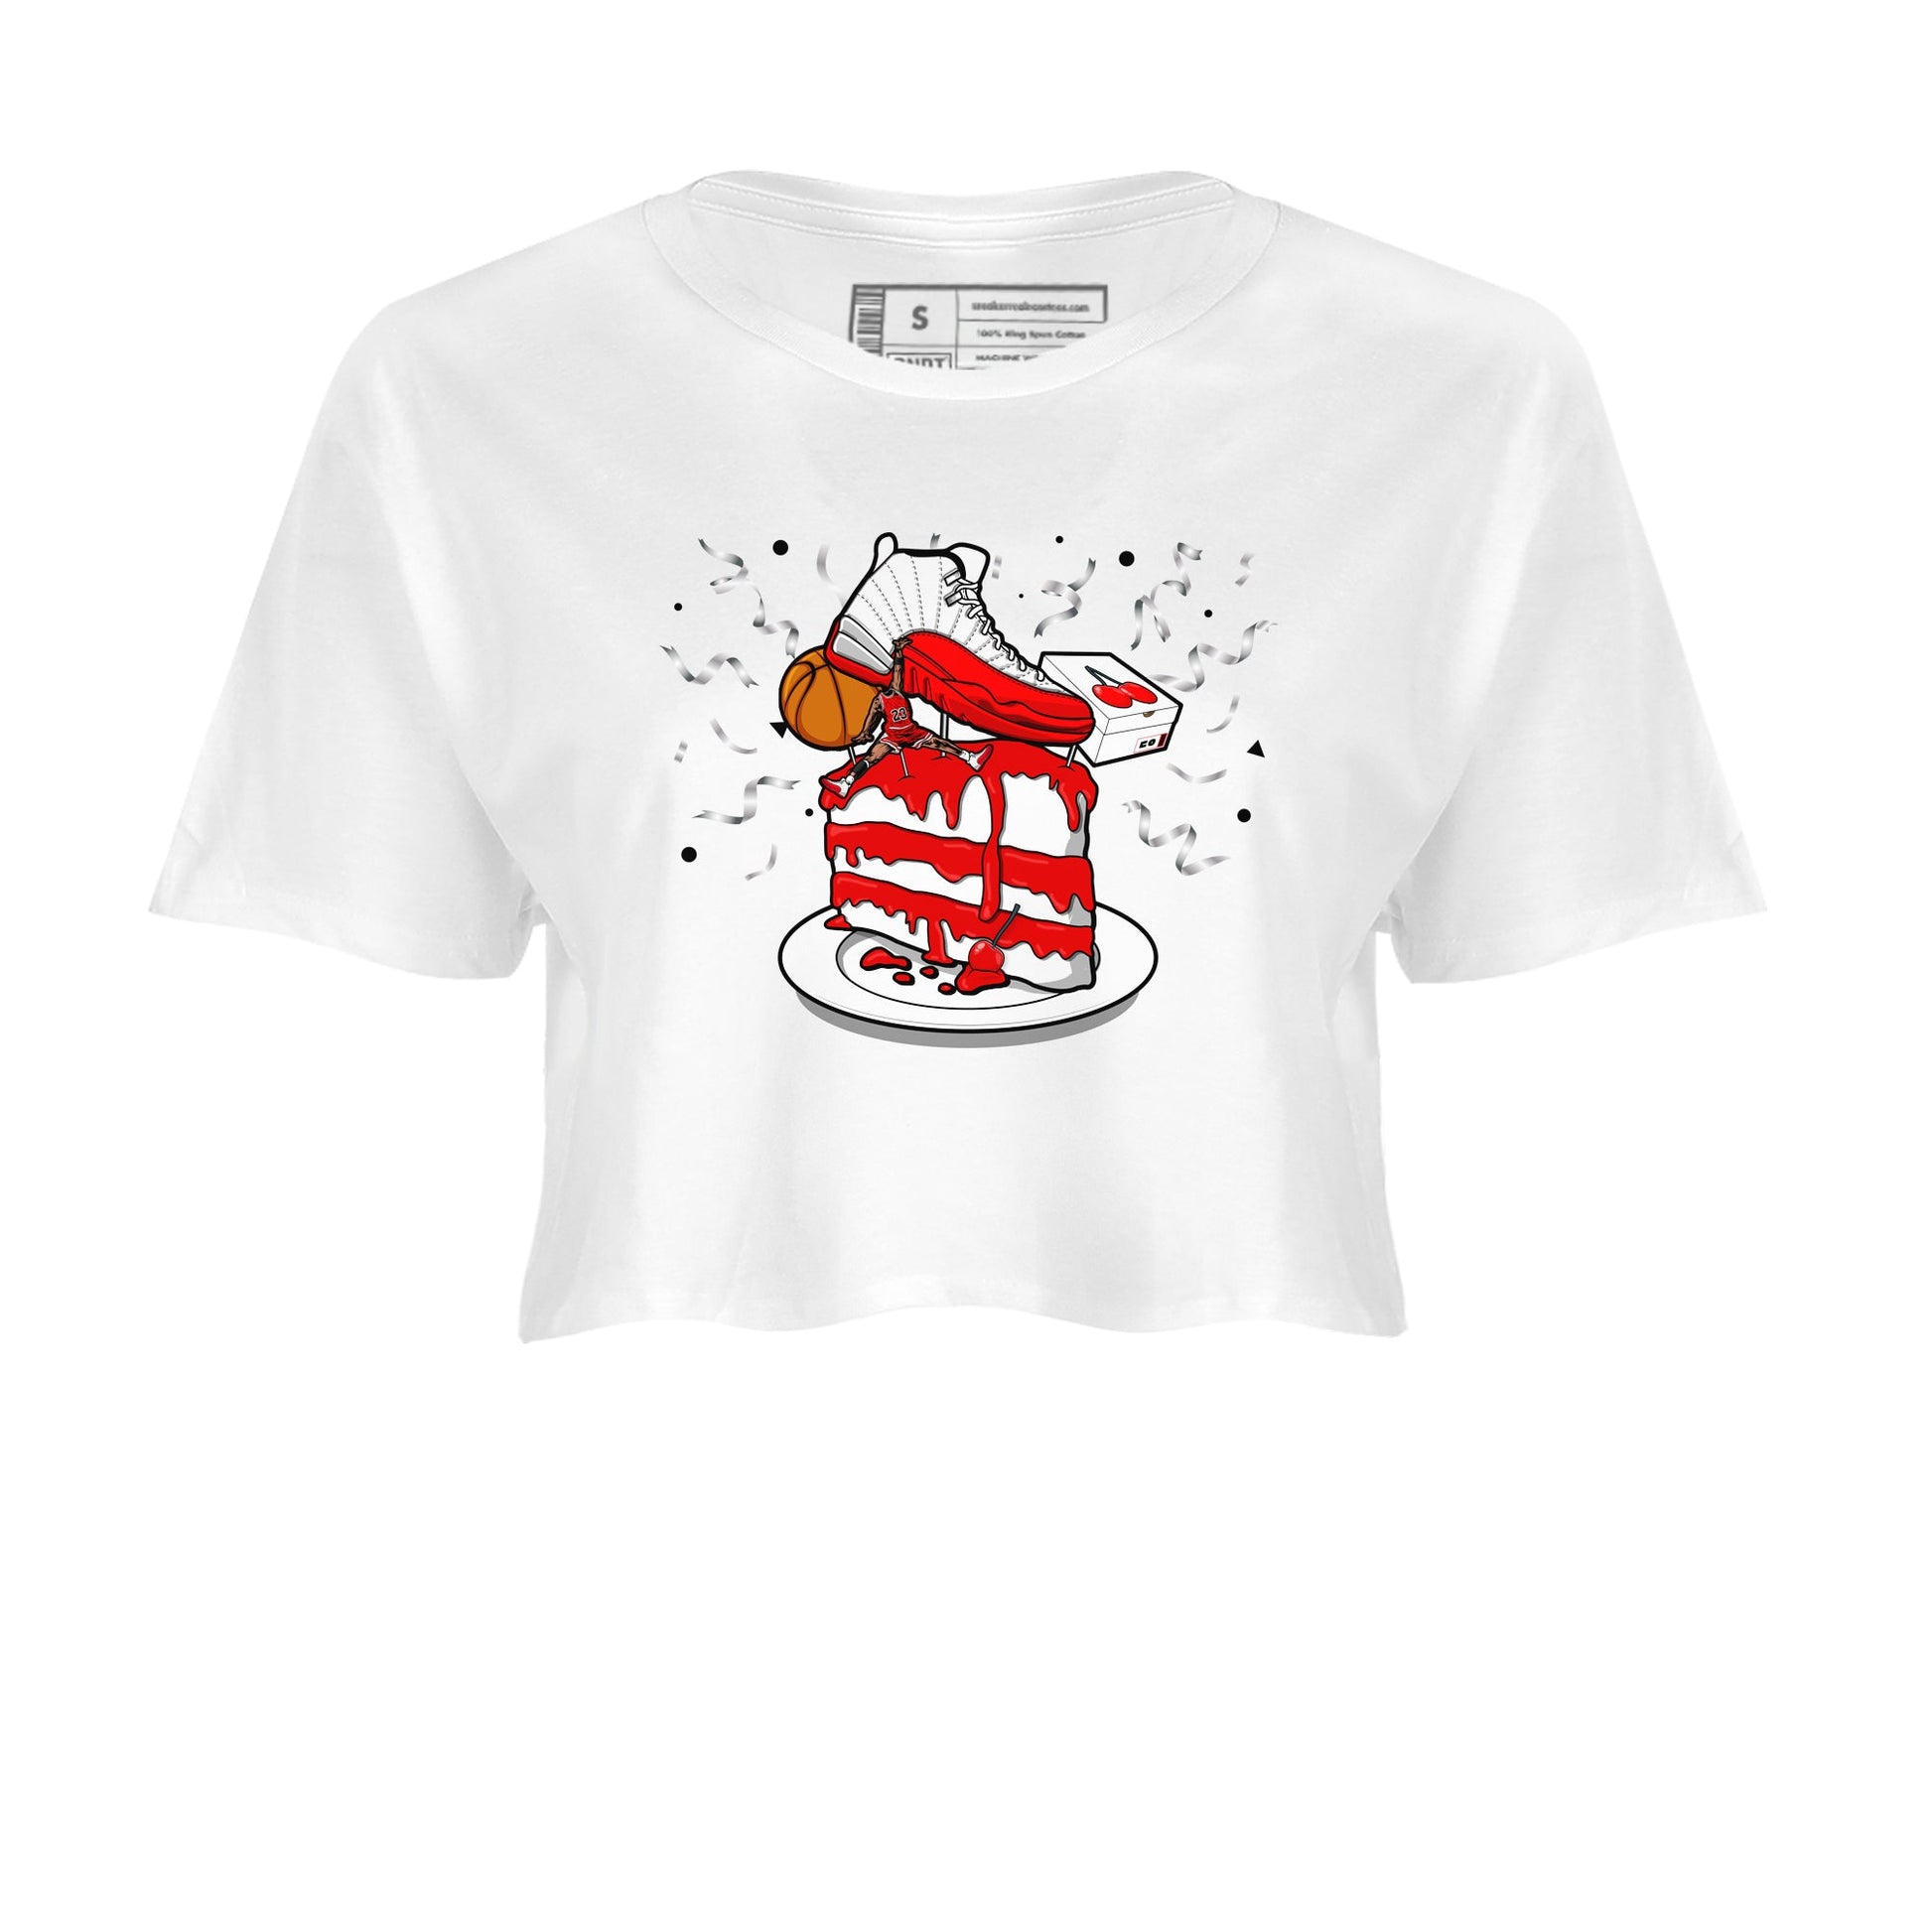 Jordan 12 Retro Cherry shirt to match jordans Varsity Red Sneaker Topper special sneaker matching tees 12s Cherry SNRT sneaker tees White 2 Crop T-Shirt